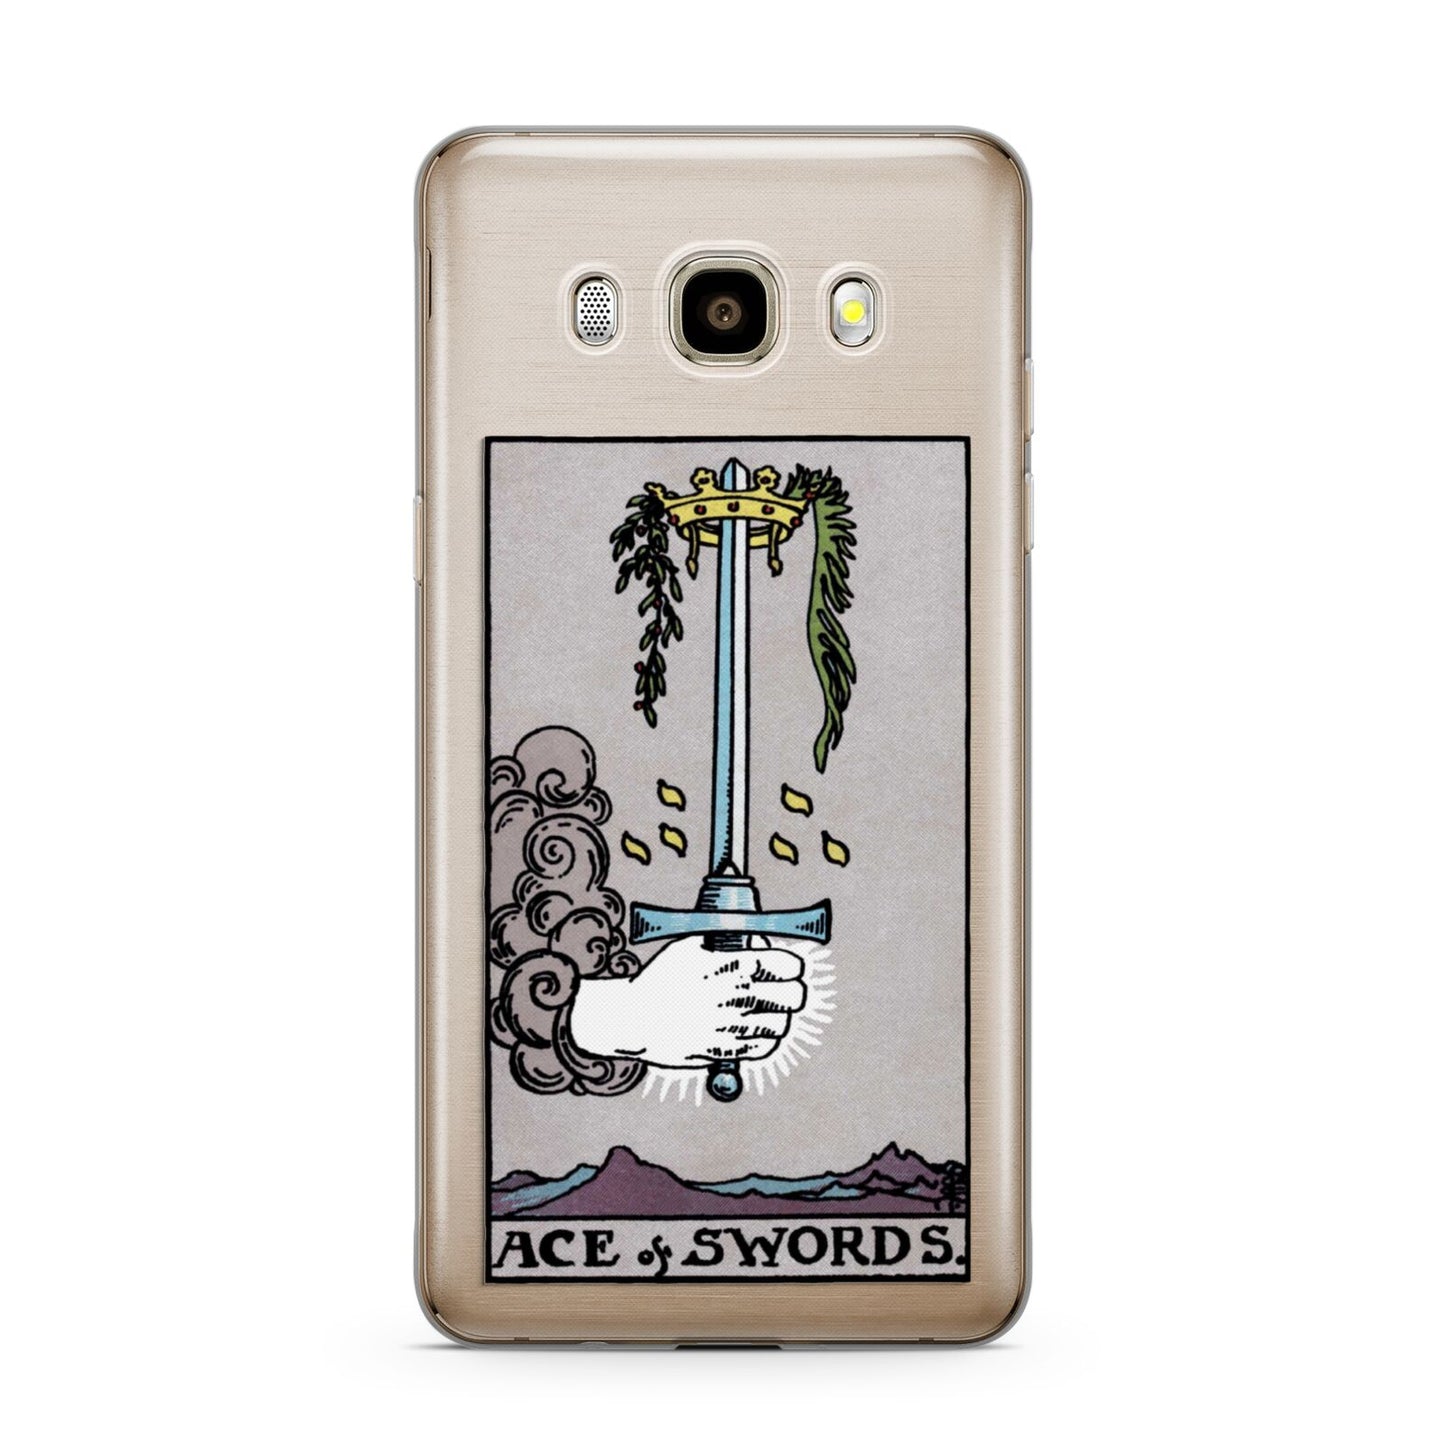 Ace of Swords Tarot Card Samsung Galaxy J7 2016 Case on gold phone